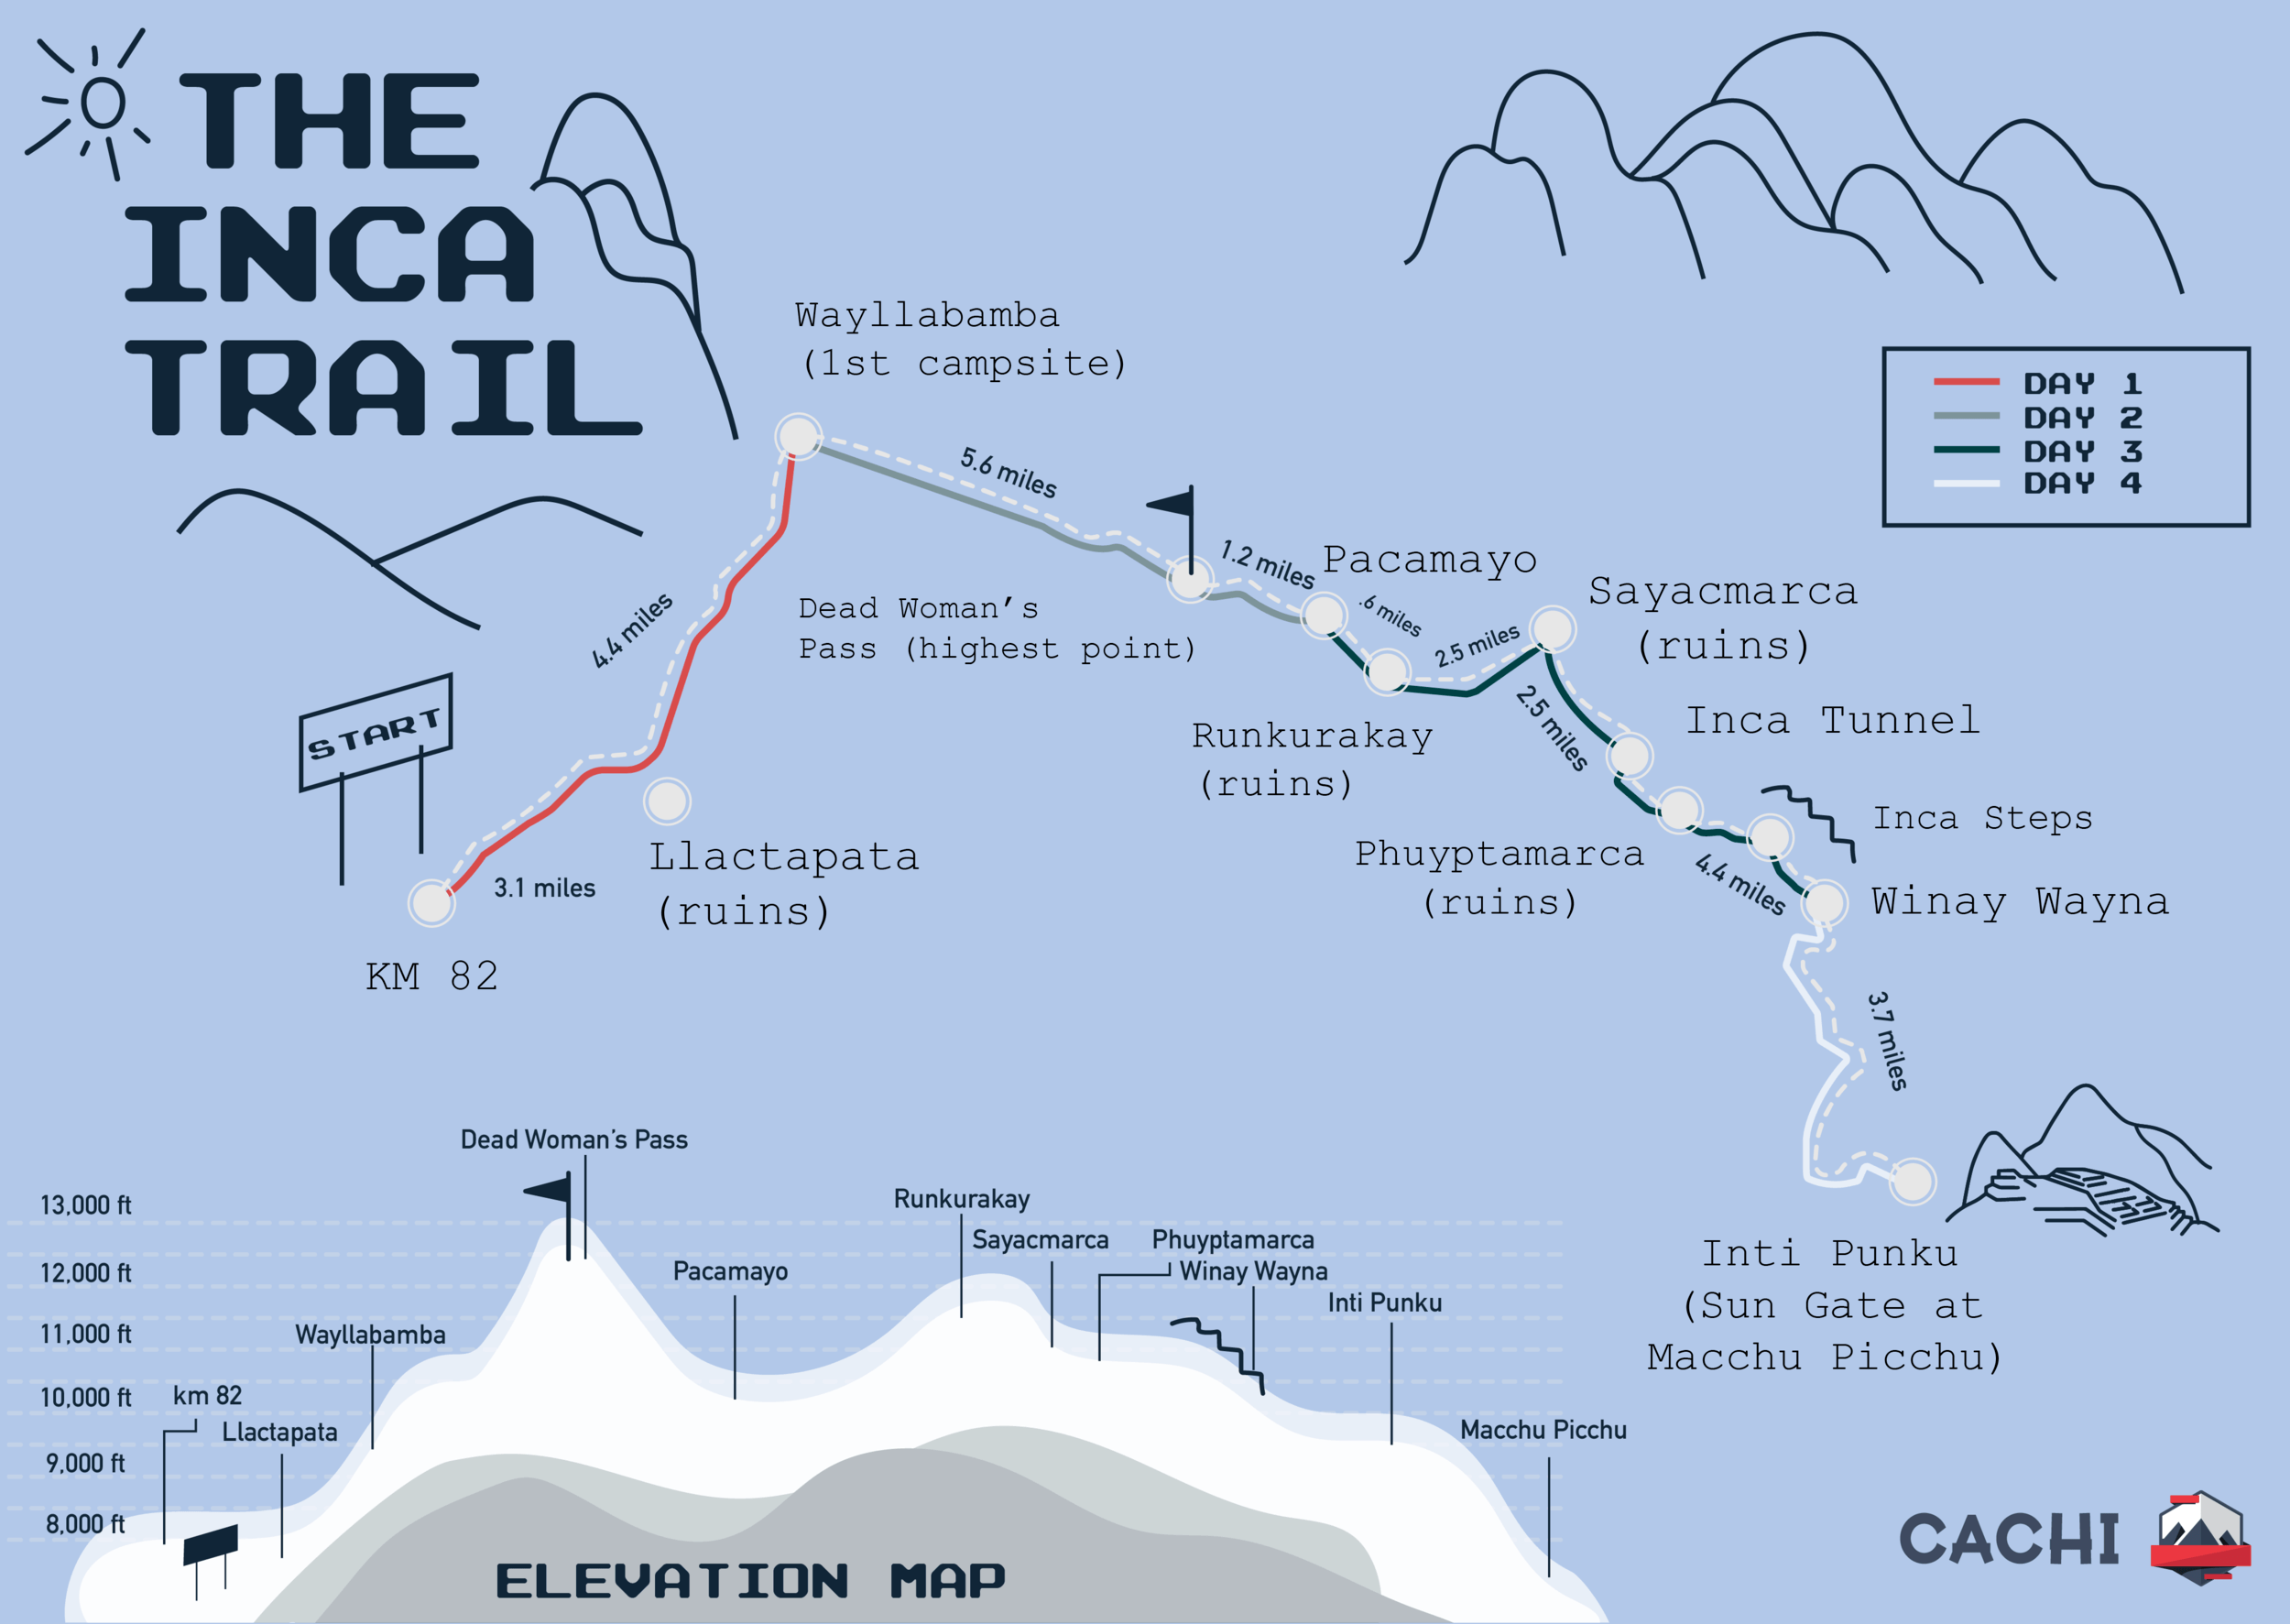 inca trail map